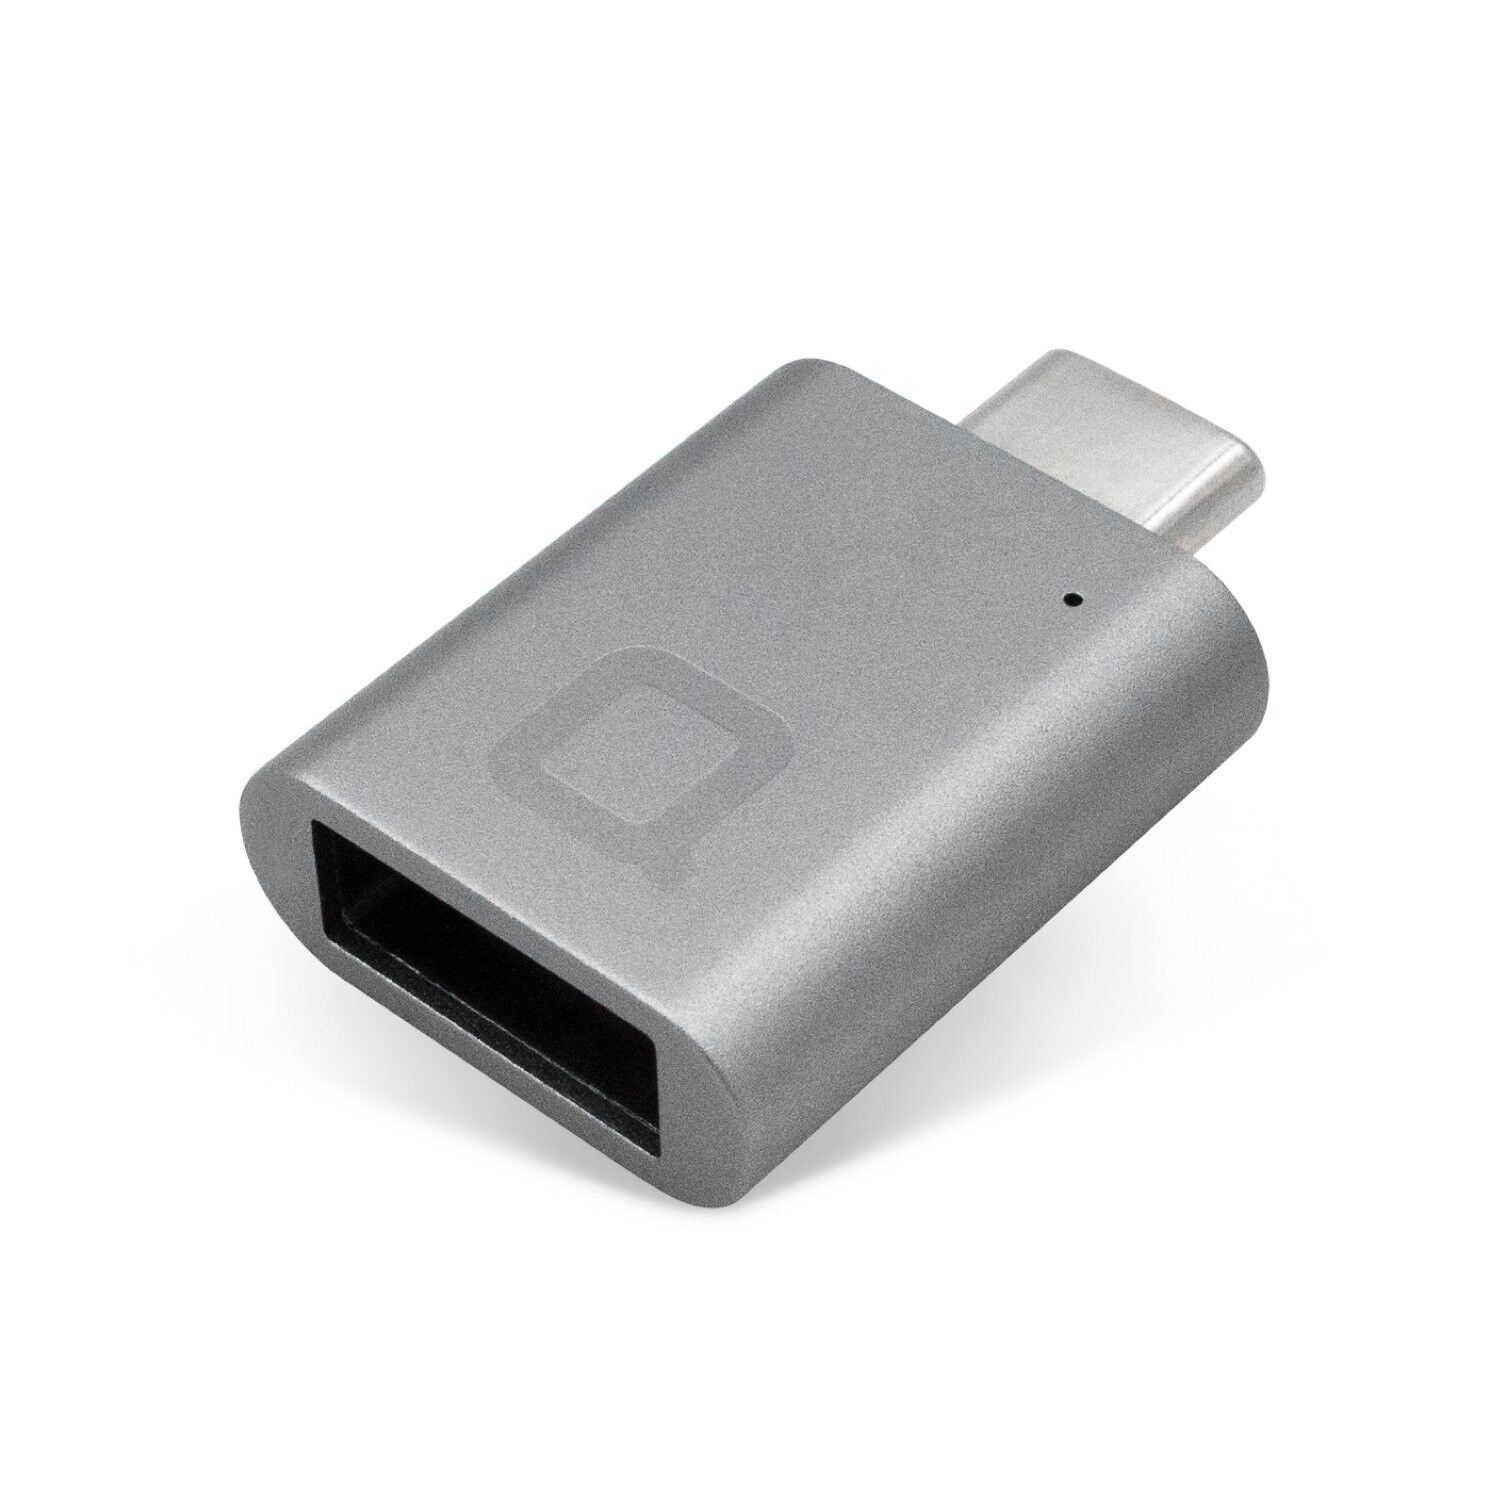 nonda USB-C to USB 3.0 Mini Adapter [Worlds Smallest] Aluminum Body with Indi...